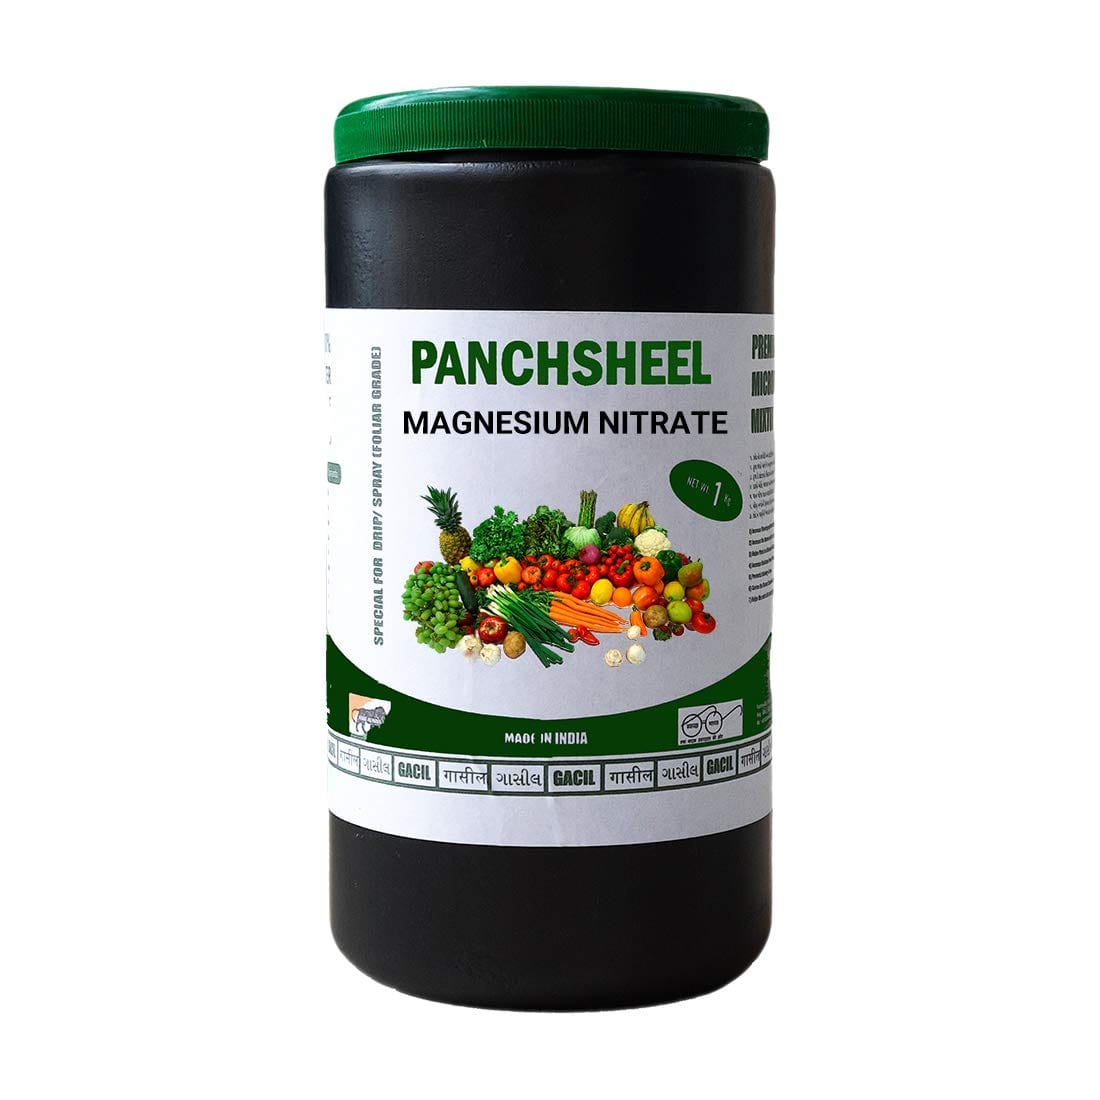 Panchsheel Magnesium Nitrate Fertilizer 100% Water Soluble White Crystalline Flacks Powder (700 gms)